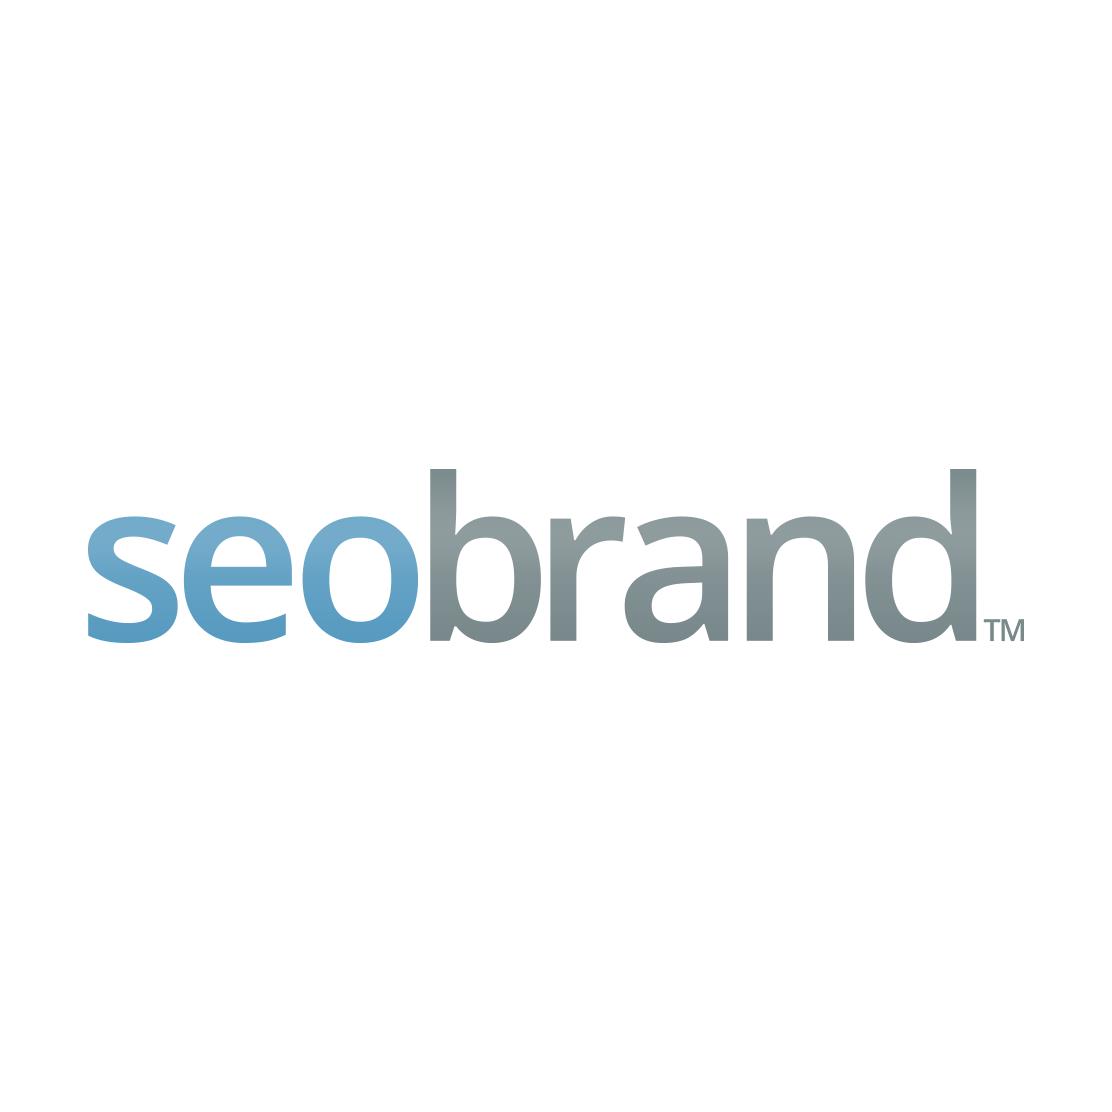 Best Reputation Management Business Logo: SEO Brand